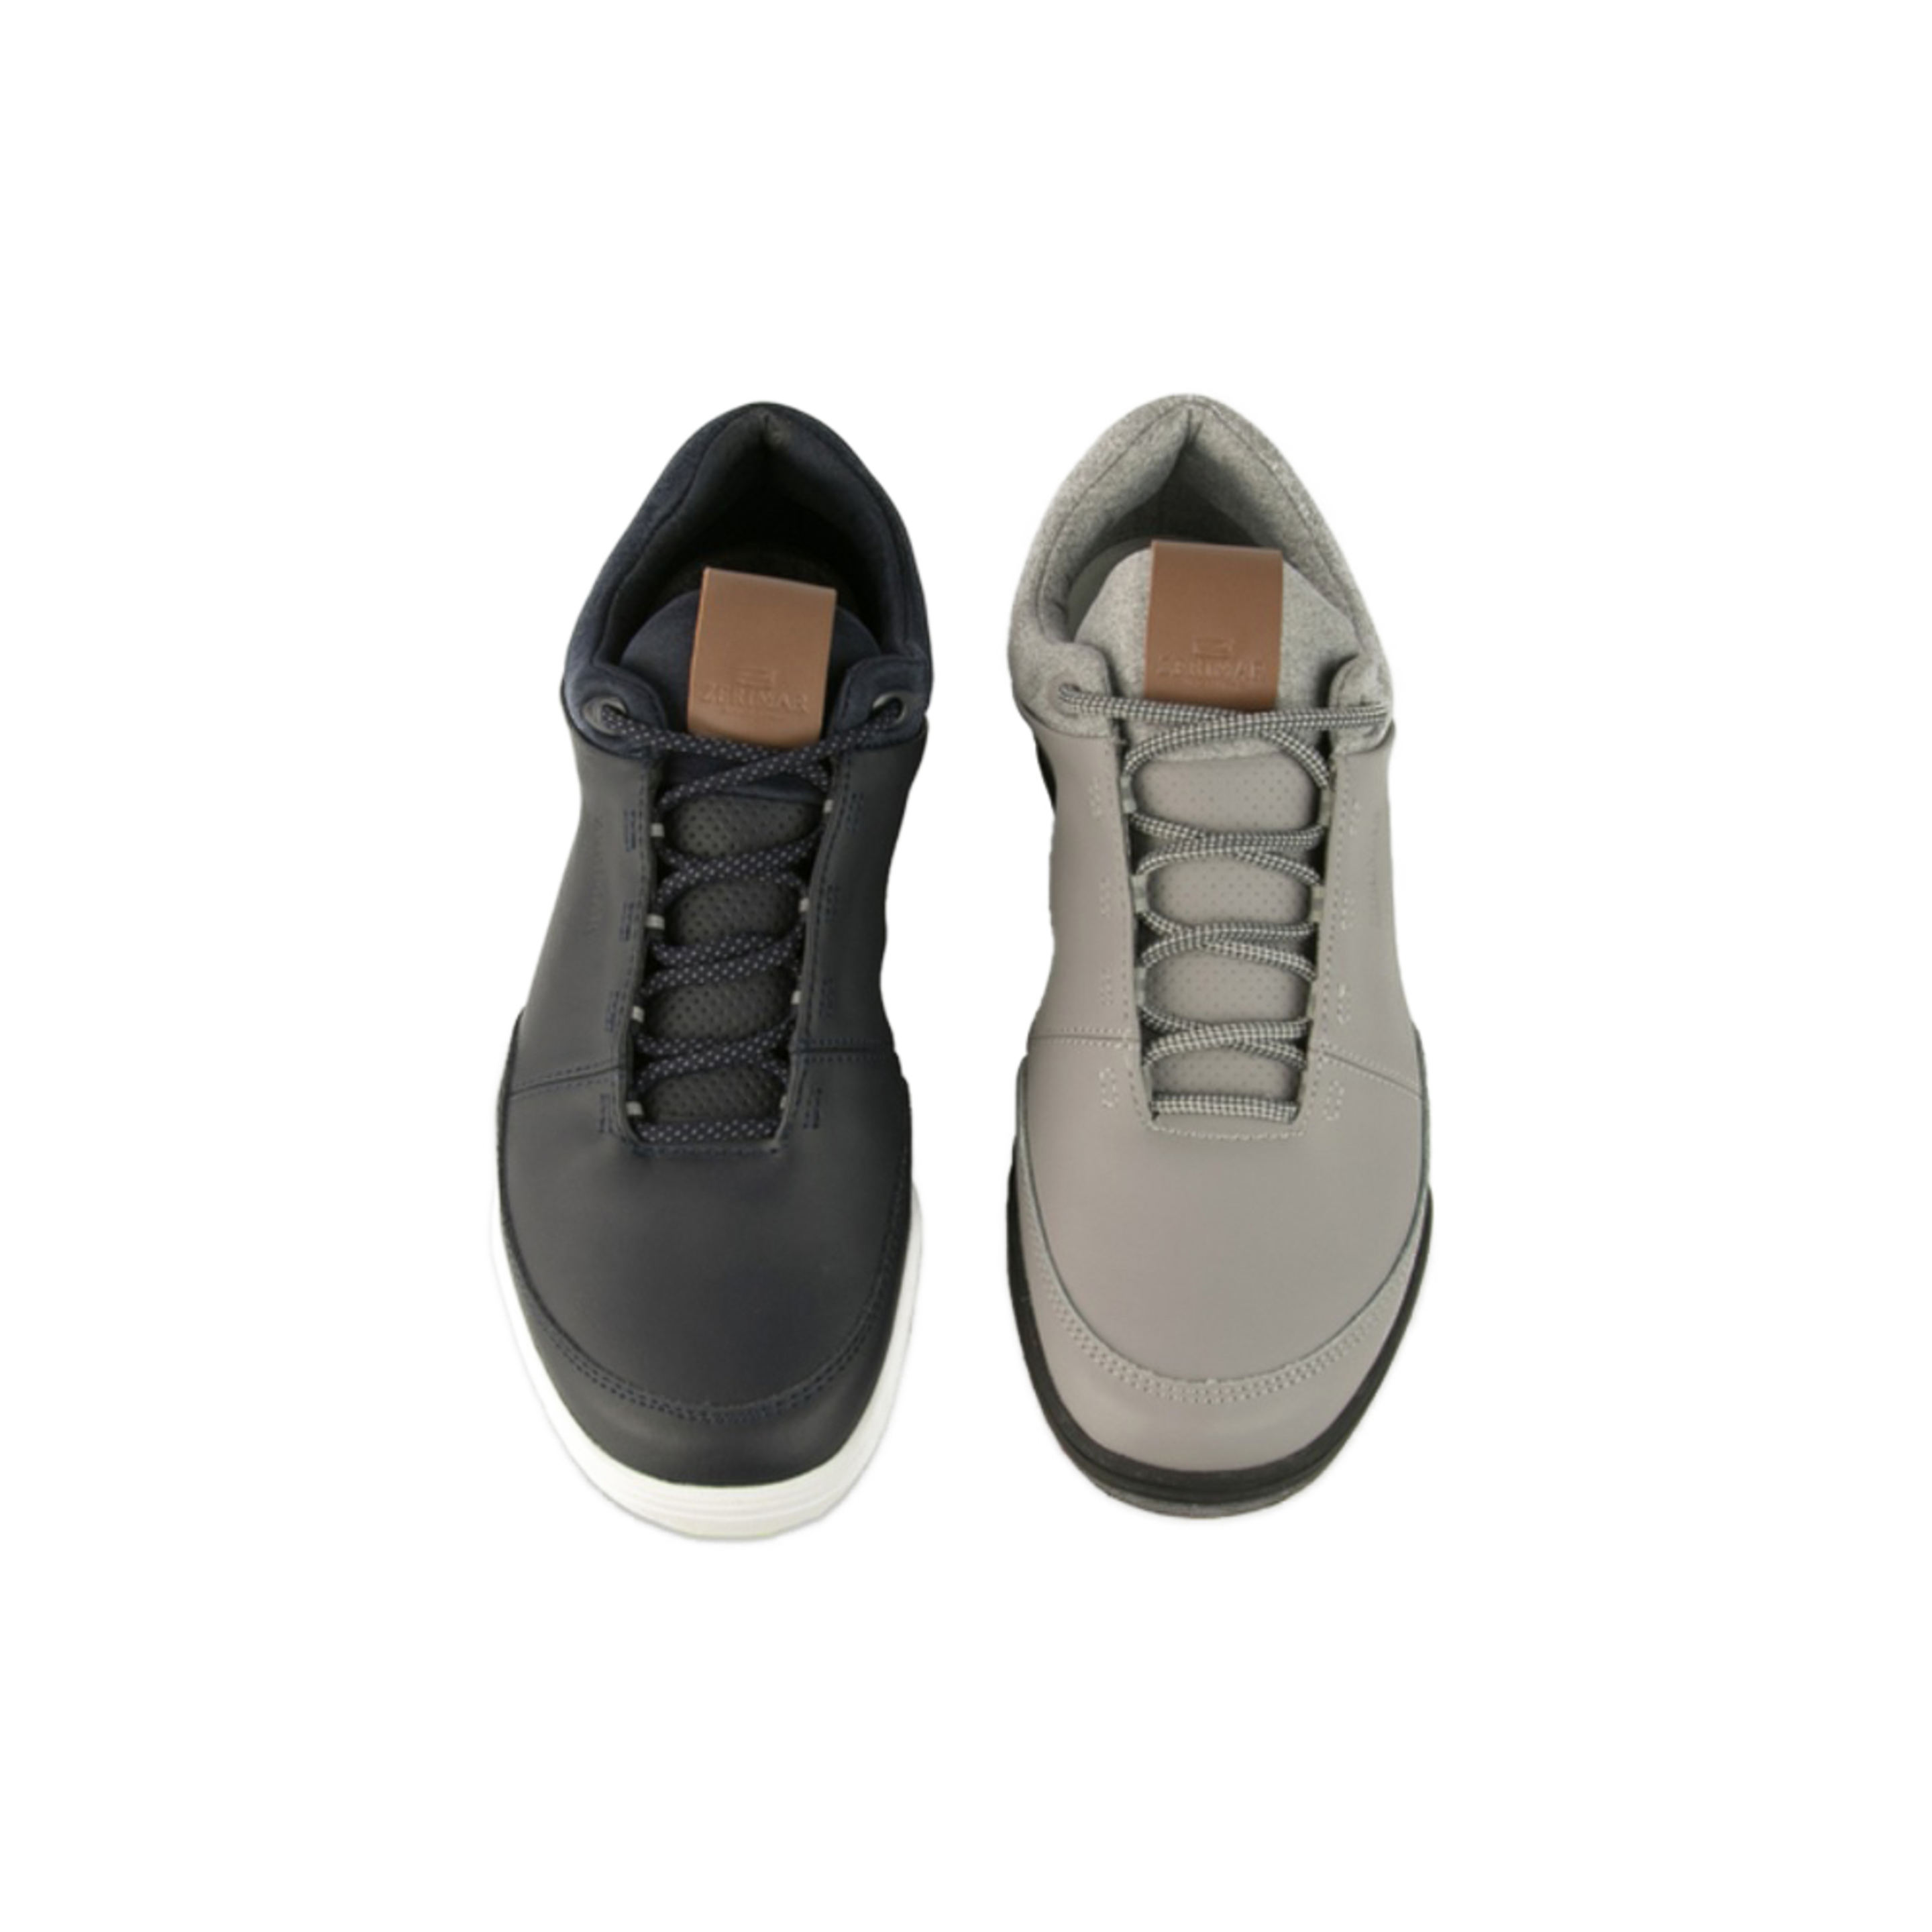 Sapatos De Golfe Masculino Sapatos Desportivos Sapatos De Couro - Azul Marinho - Sapatos de golfe para homens sapatos de couro | Sport Zone MKP